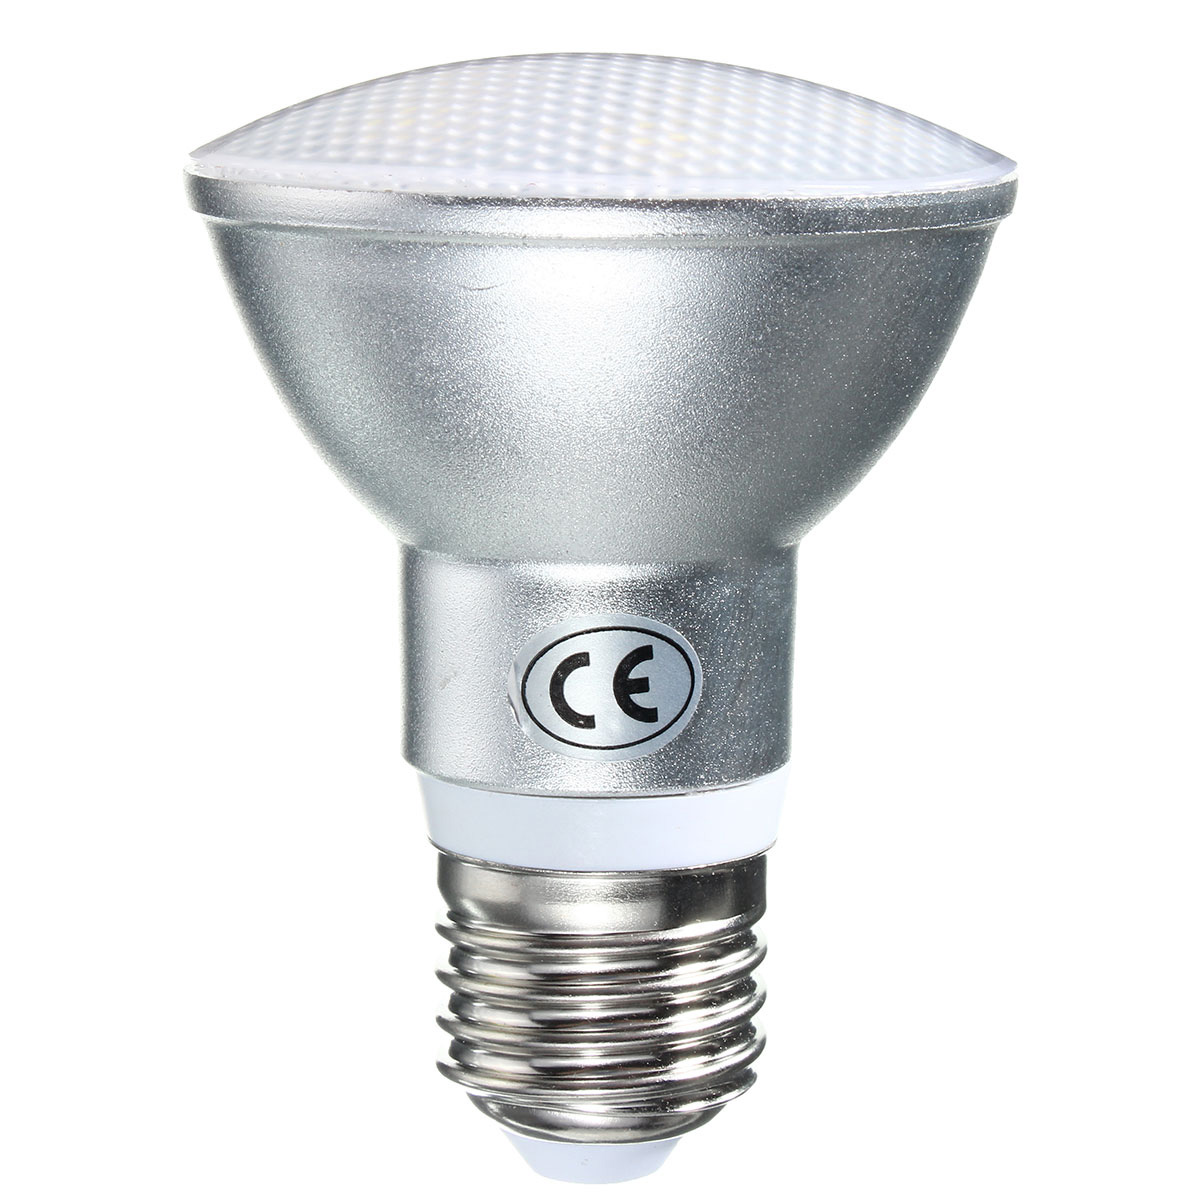 Dimmable-E27-PAR20-9W-LED-PlasticampALuminum-525Lm-IP65-Globe-Light-Lamp-Bulb-AC110V-1073157